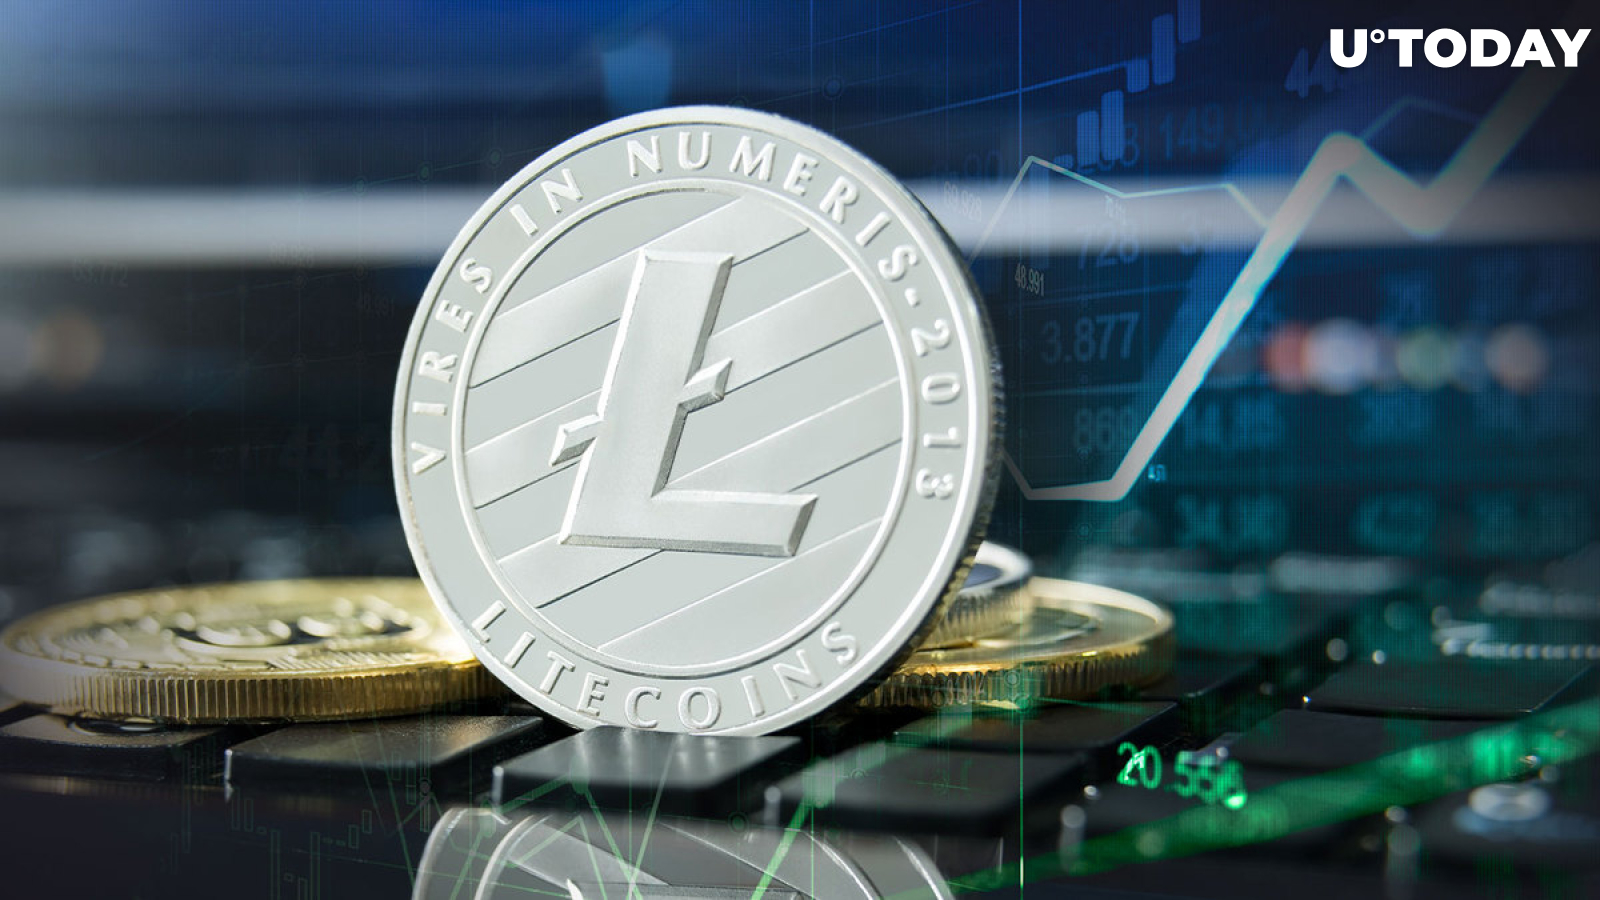 Litecoin (LTC) Pushes Through 6.3 Million Transactions Since January 1